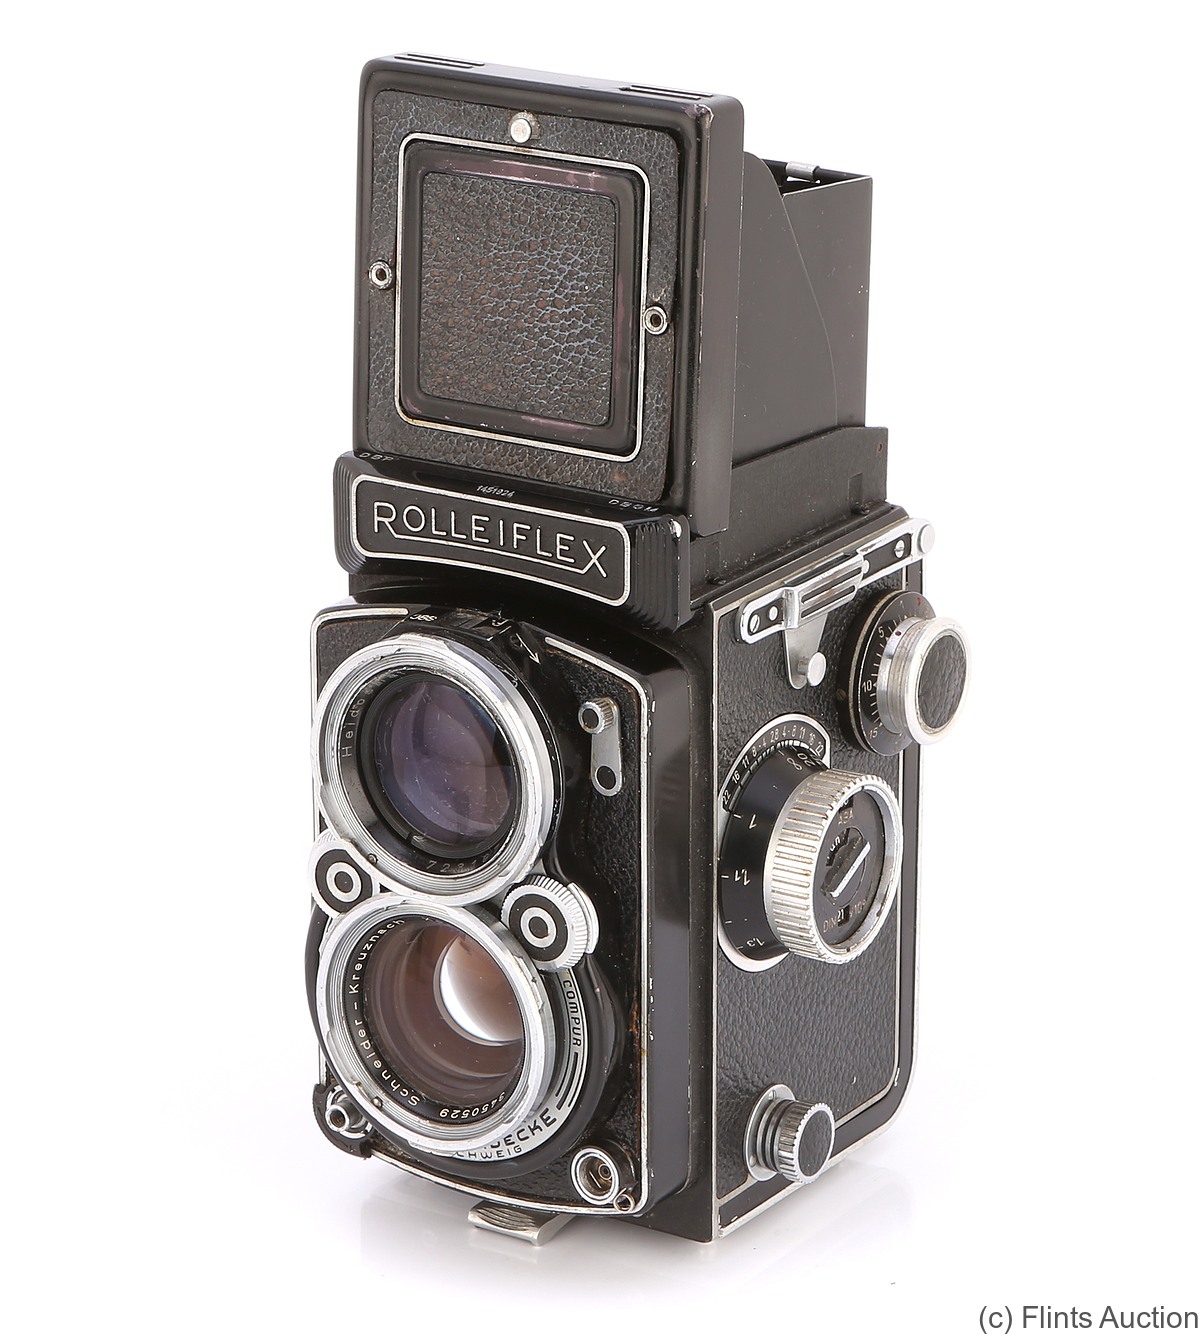 Rollei: Rolleiflex 2.8 C (Automat 2.8C) camera